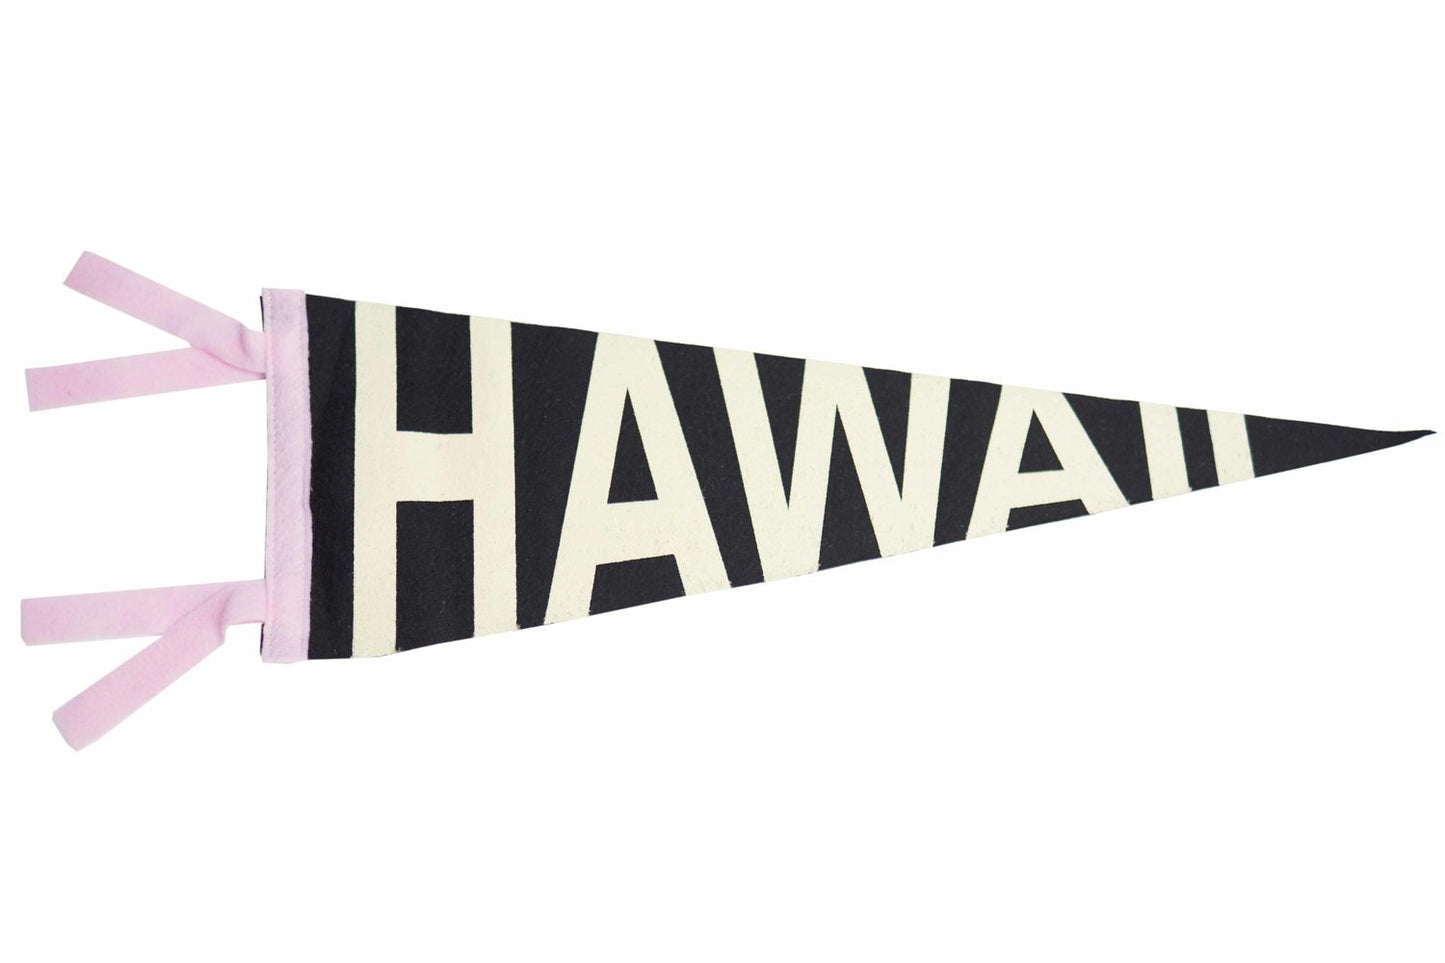 LARGE PENNANT - HAWAII